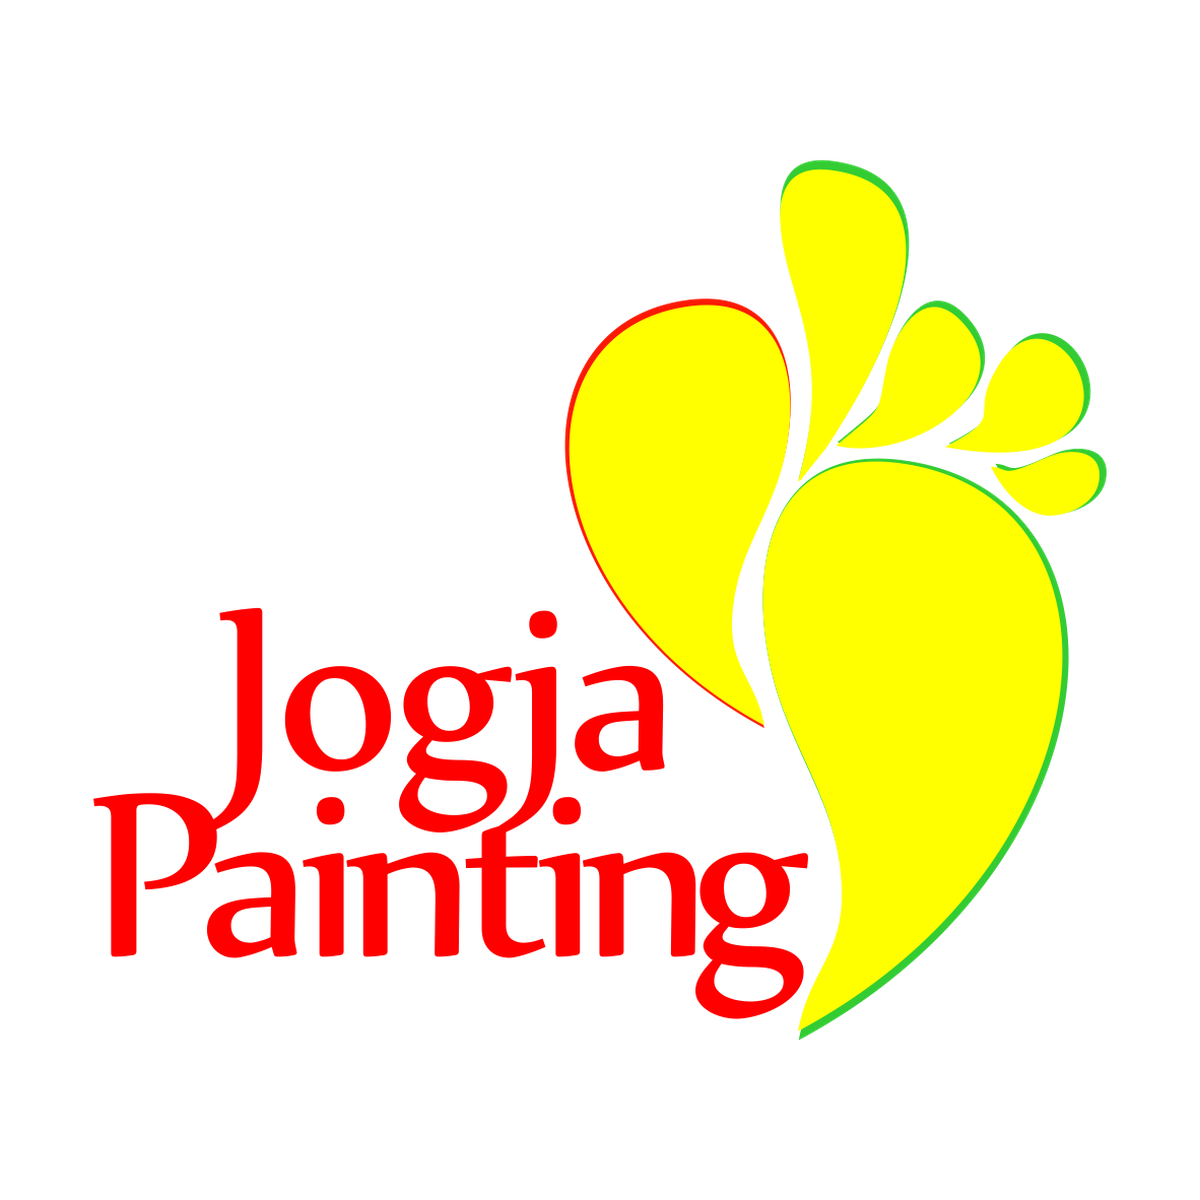 Video Editor At Jogja Painting